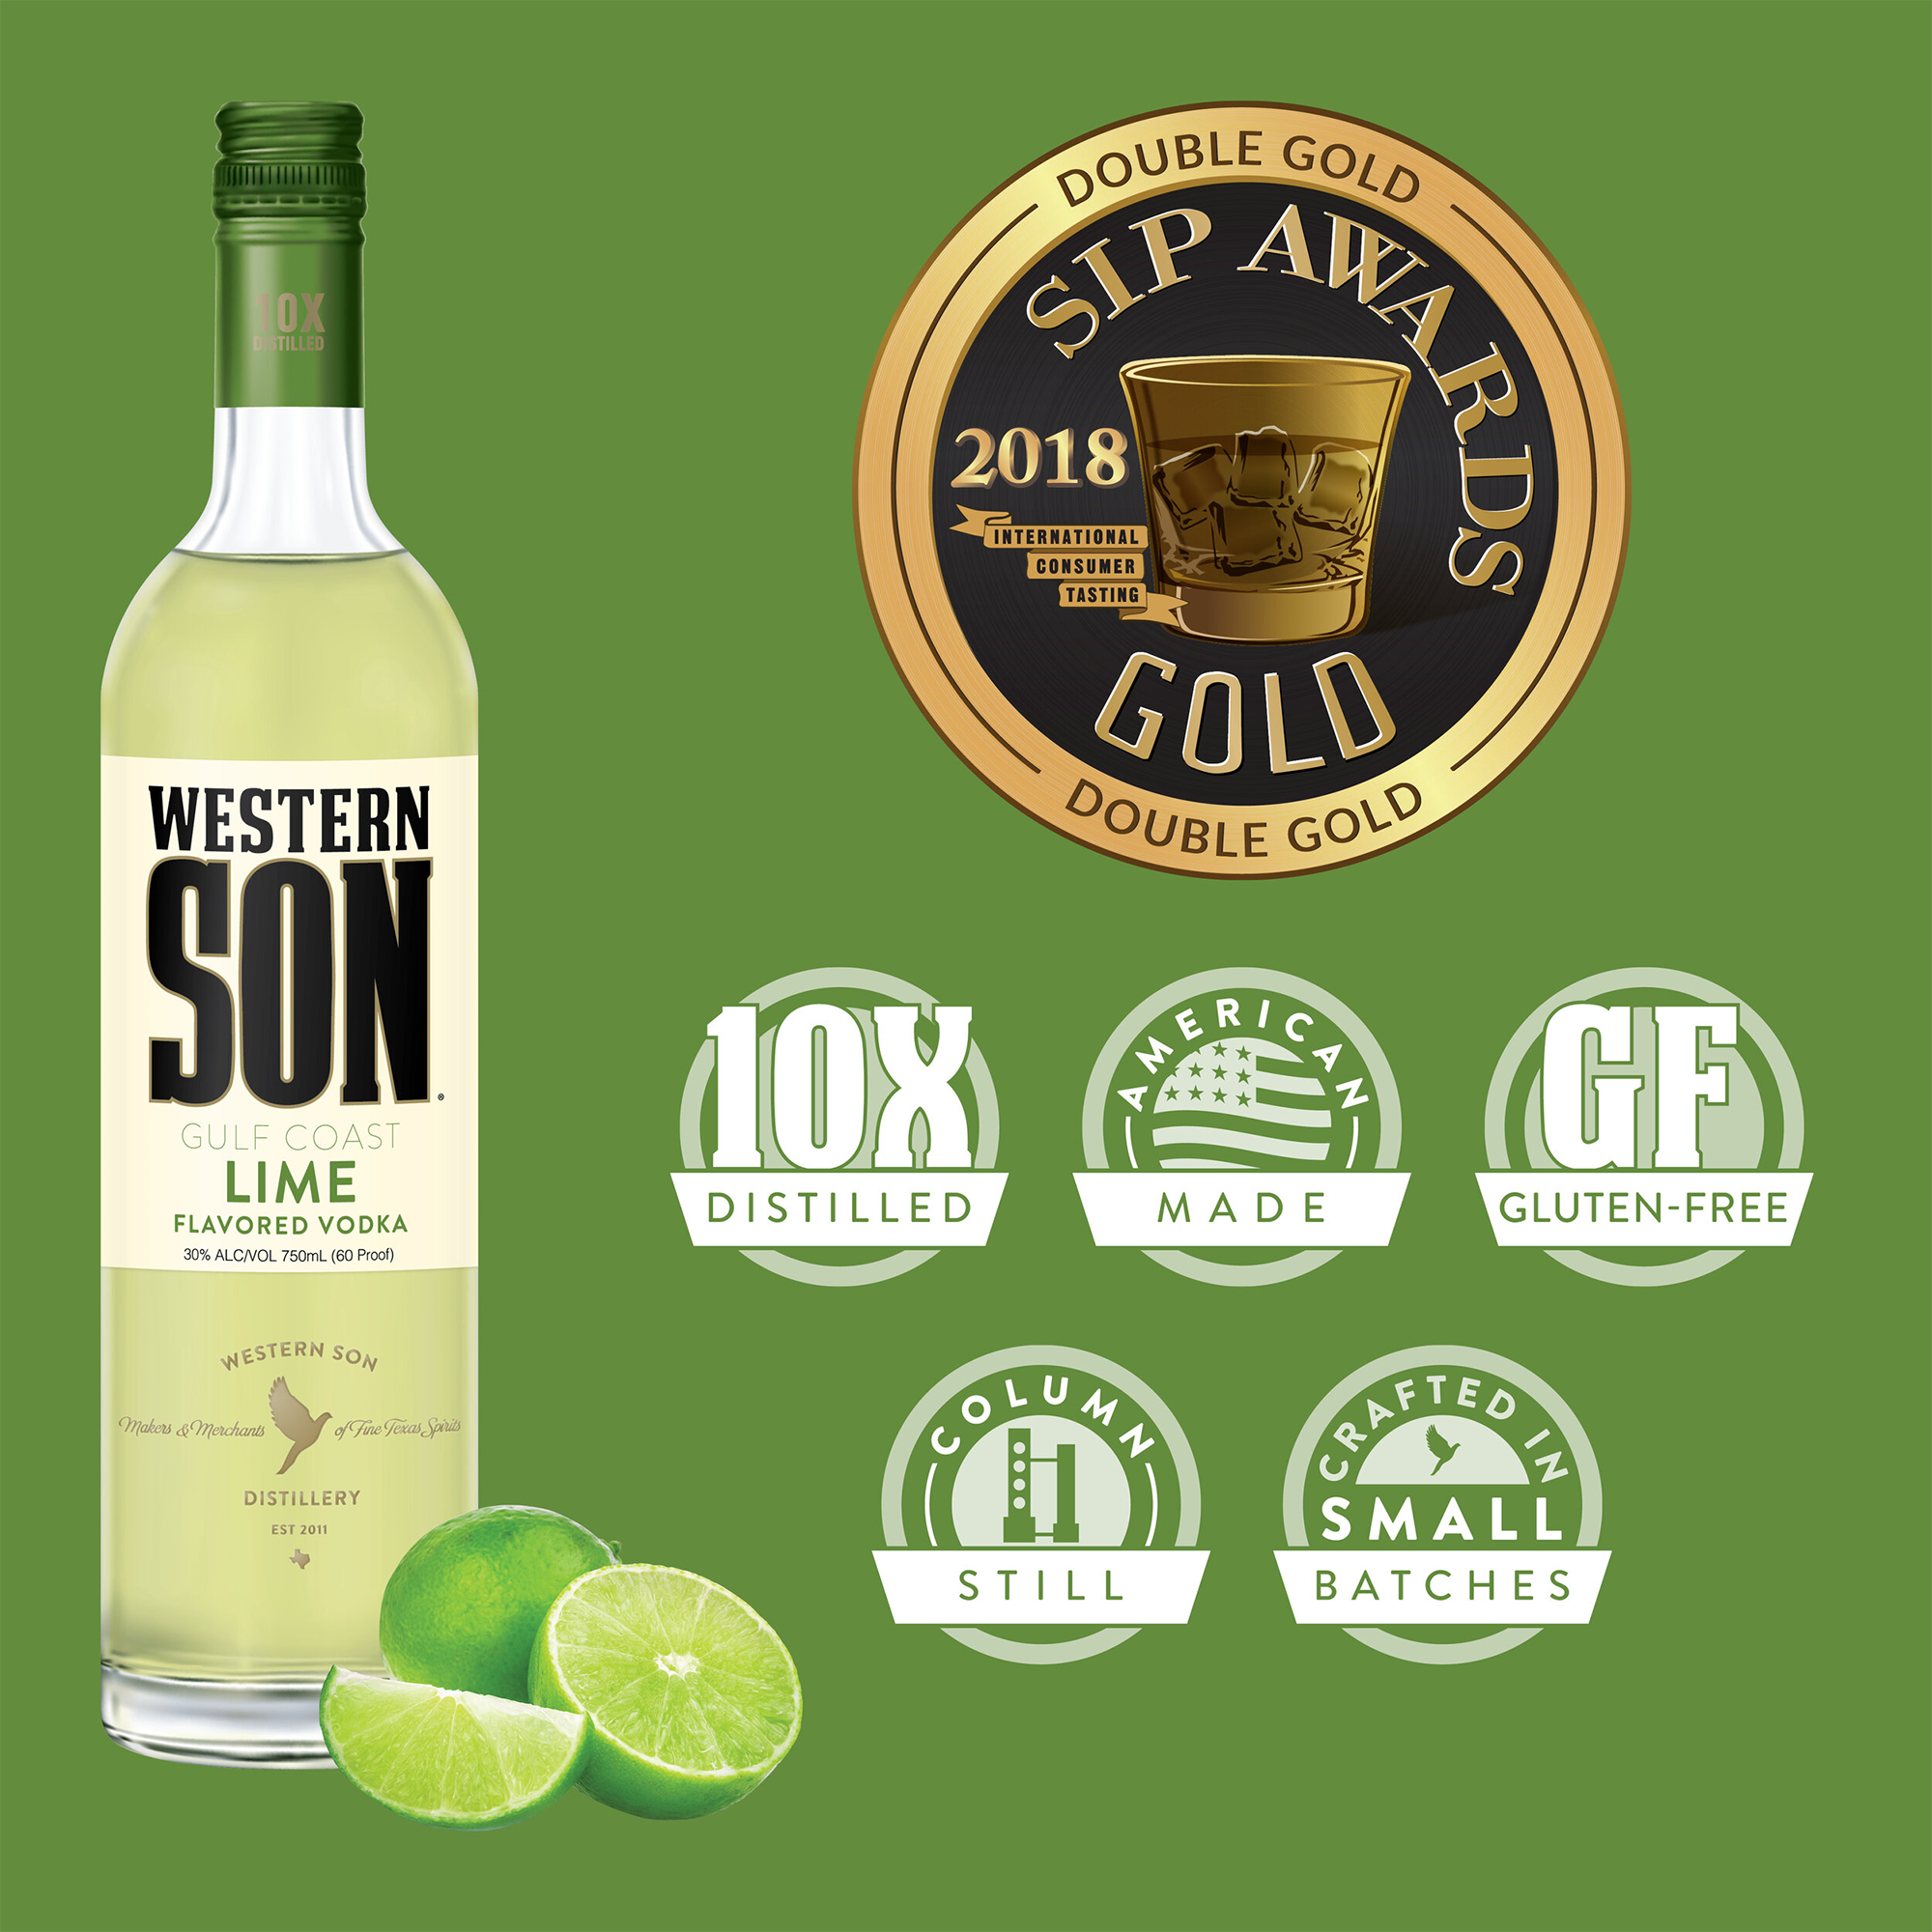 Western Son Lime Vodka 1L